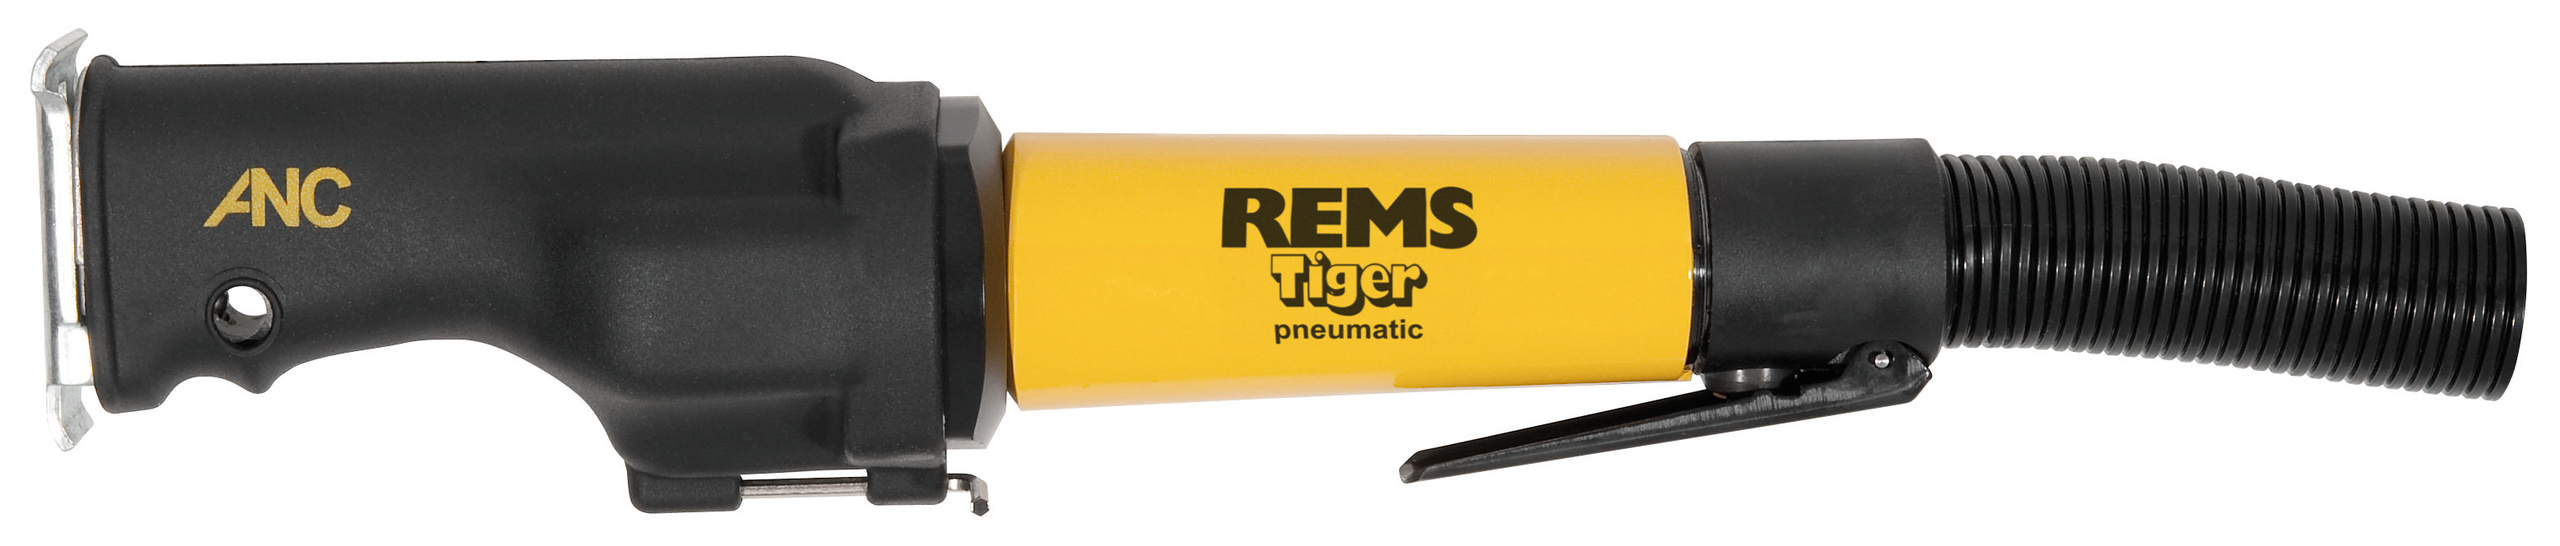 <br/>REMS Tiger pneumatic